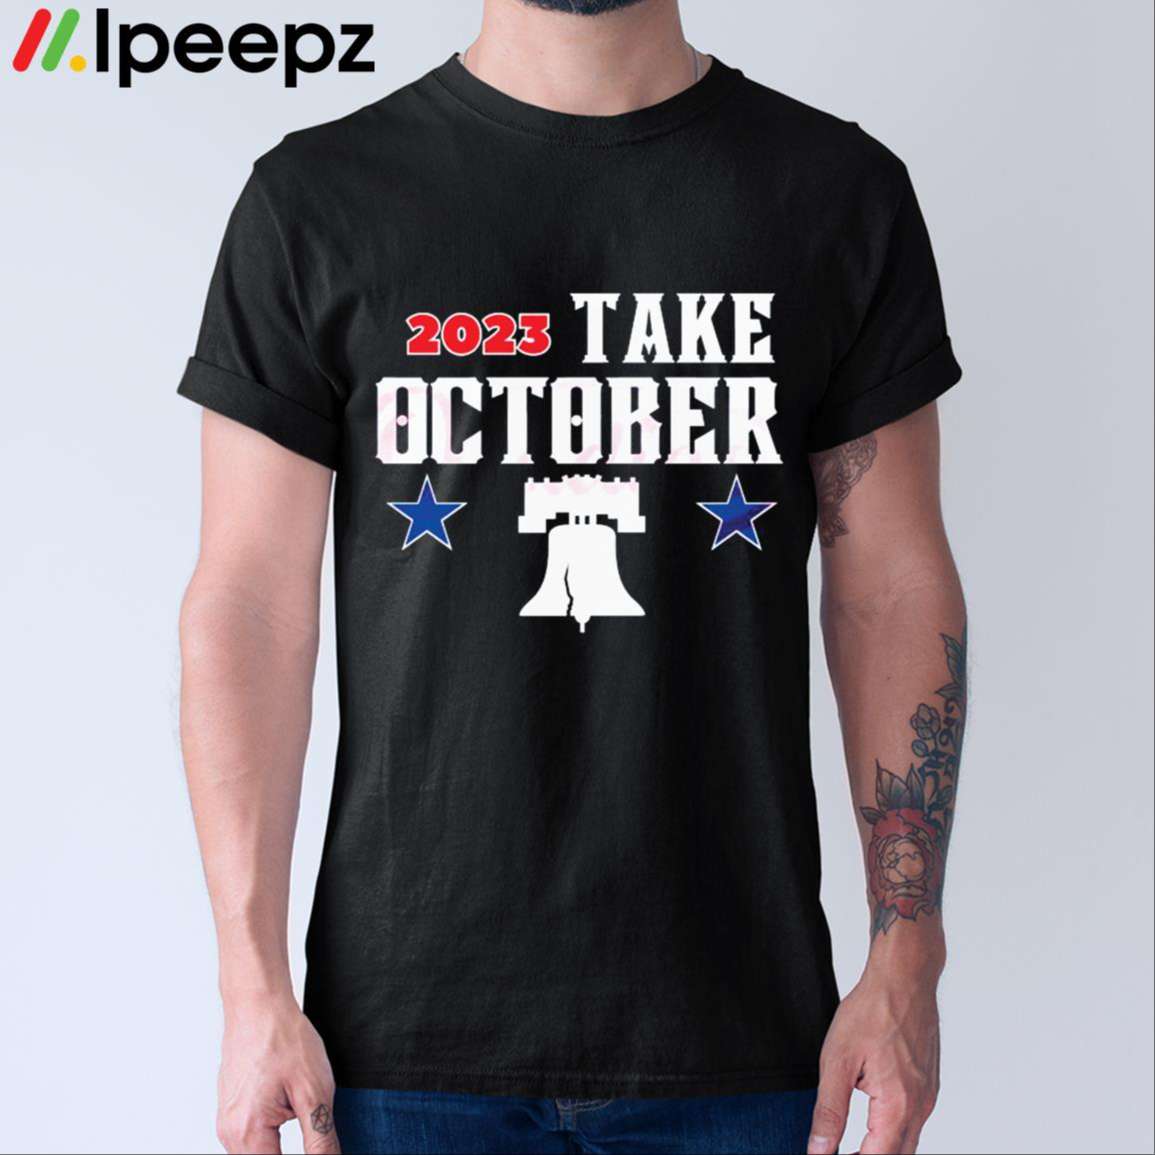 Ipeepz Phillies Take October 2023 Shirt